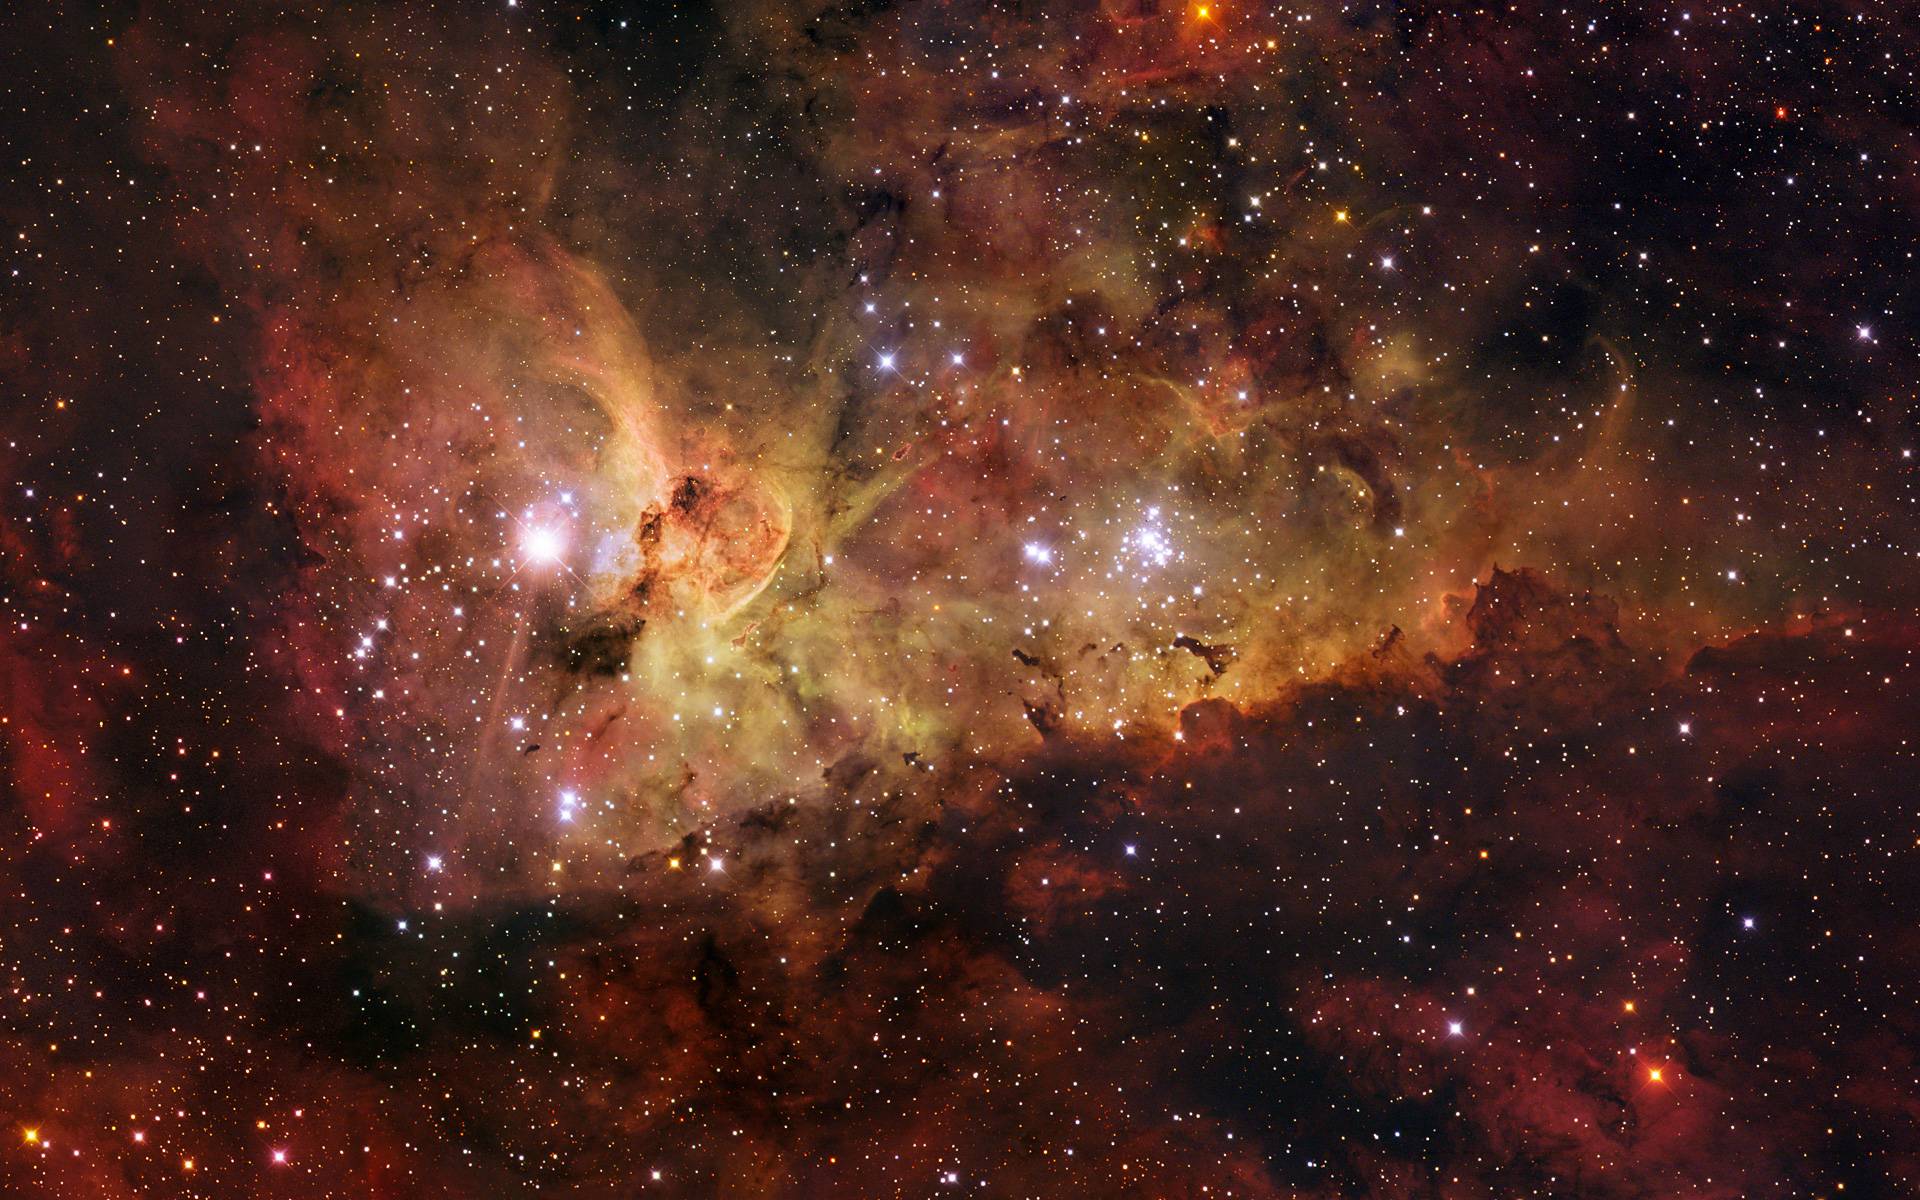 FileThe Carina Nebula